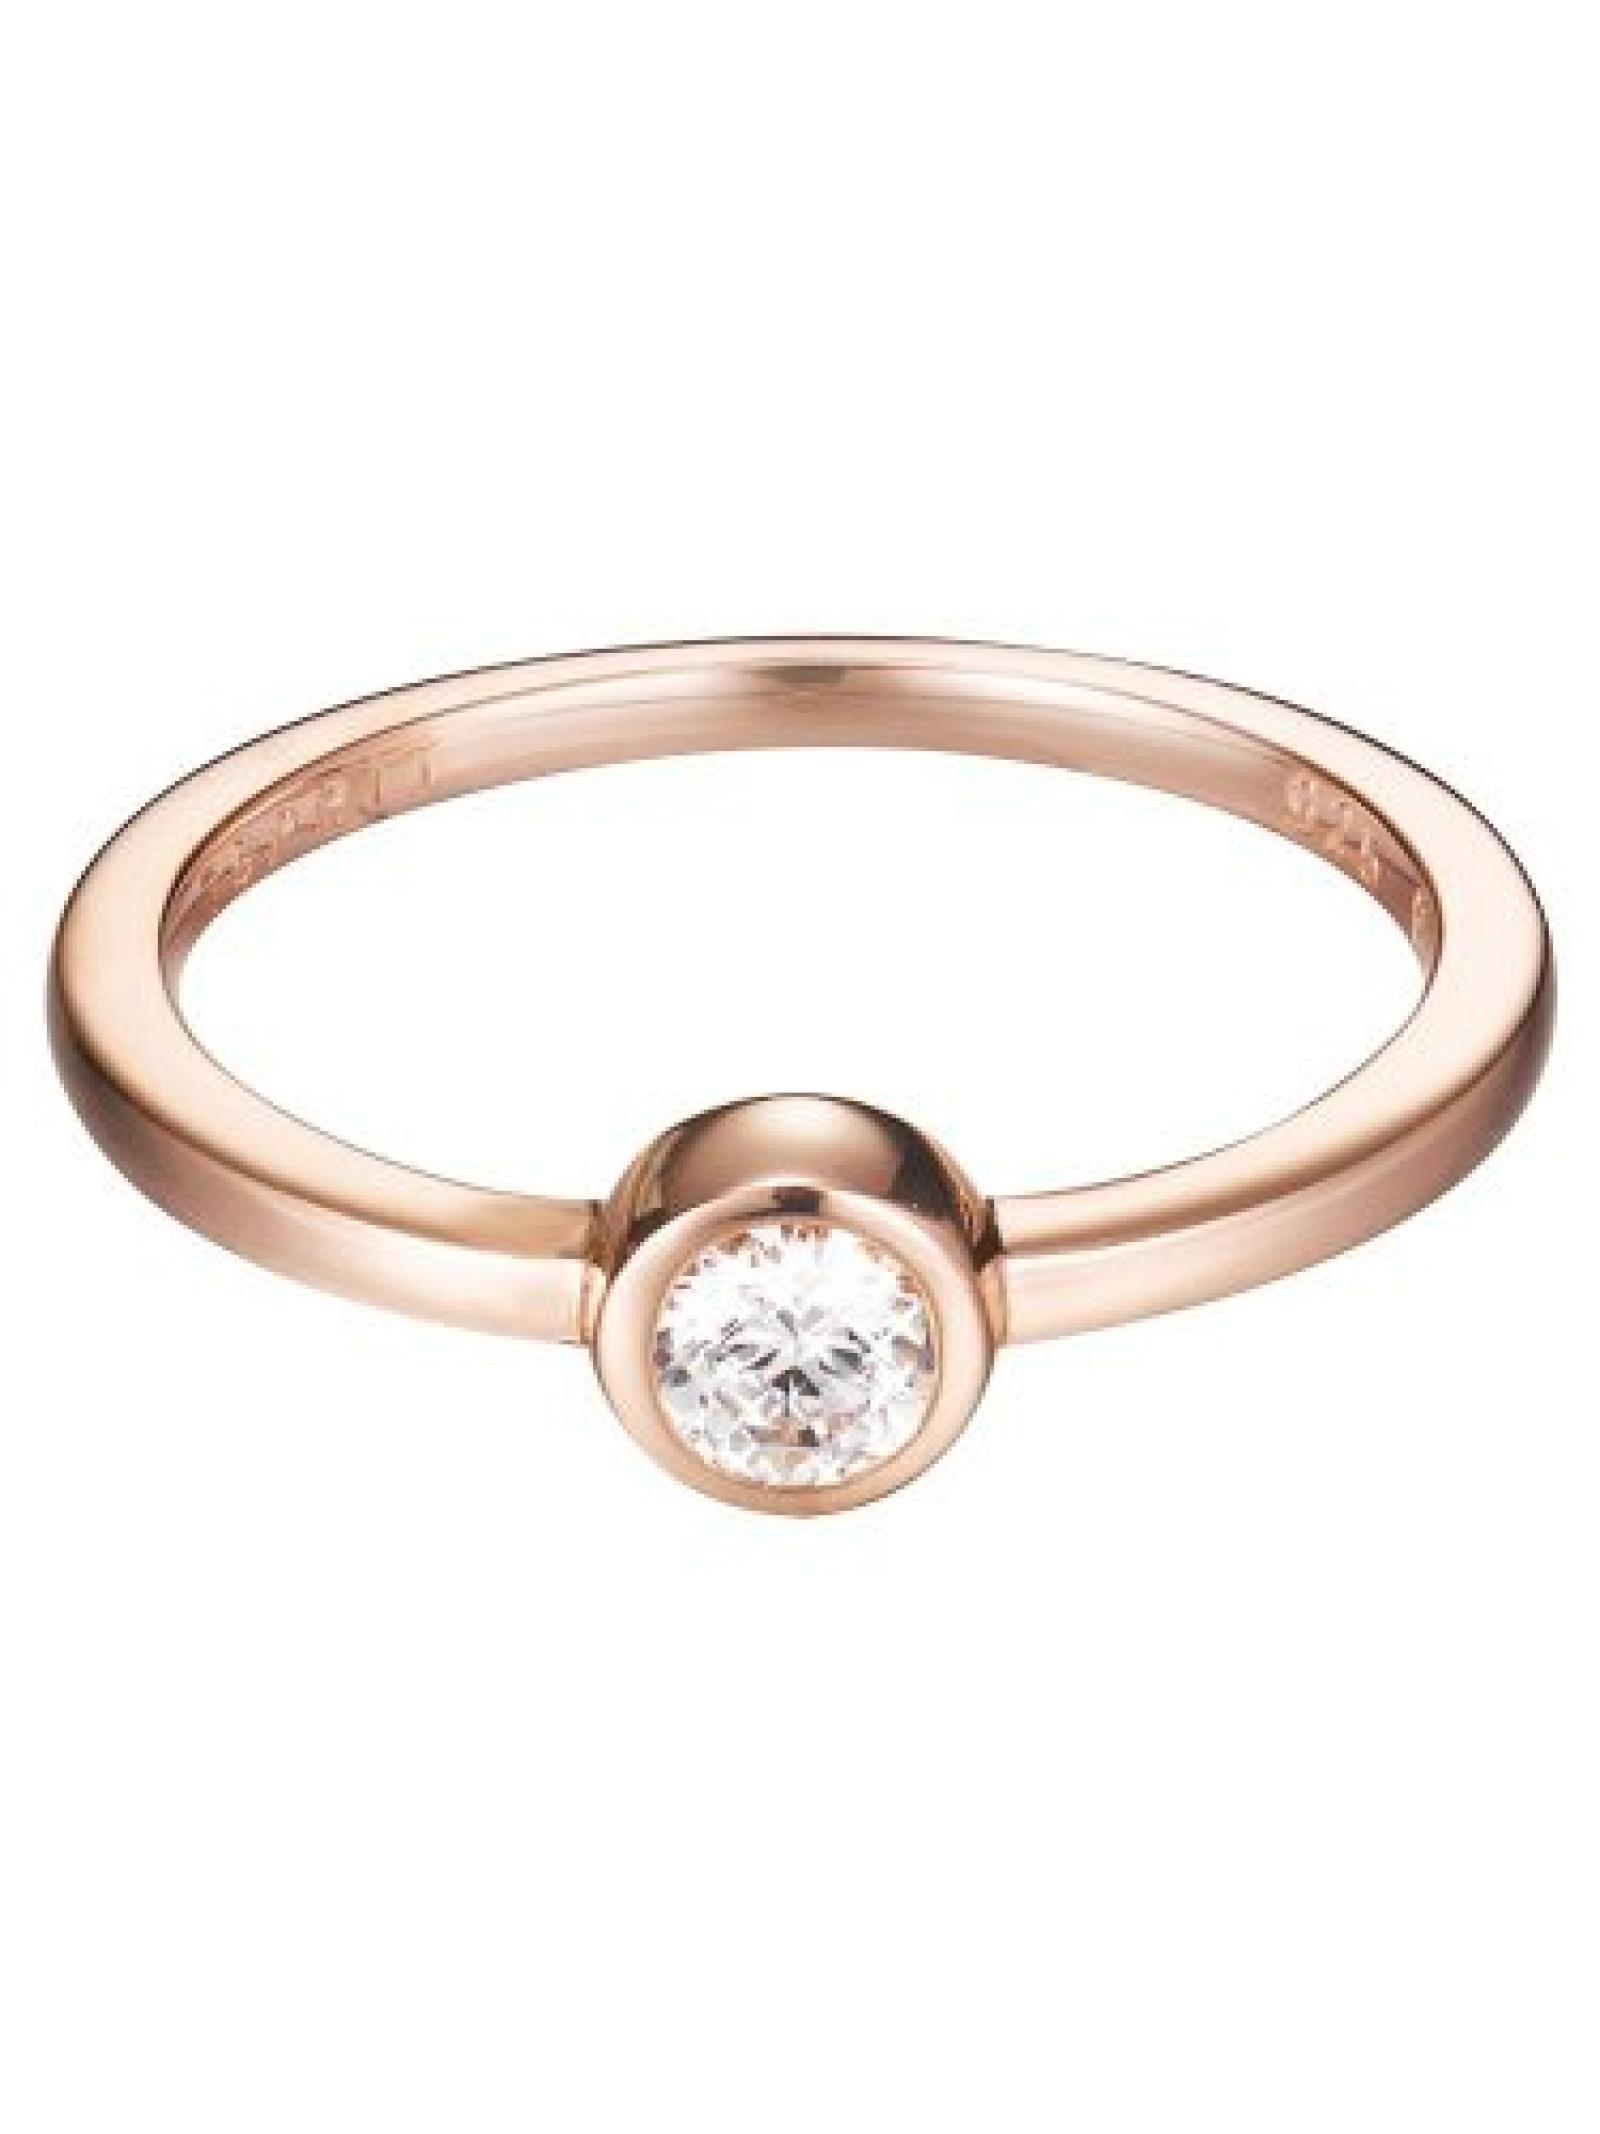 Esprit Damen-Ring 925 Sterling Silber ESRG92424B1 